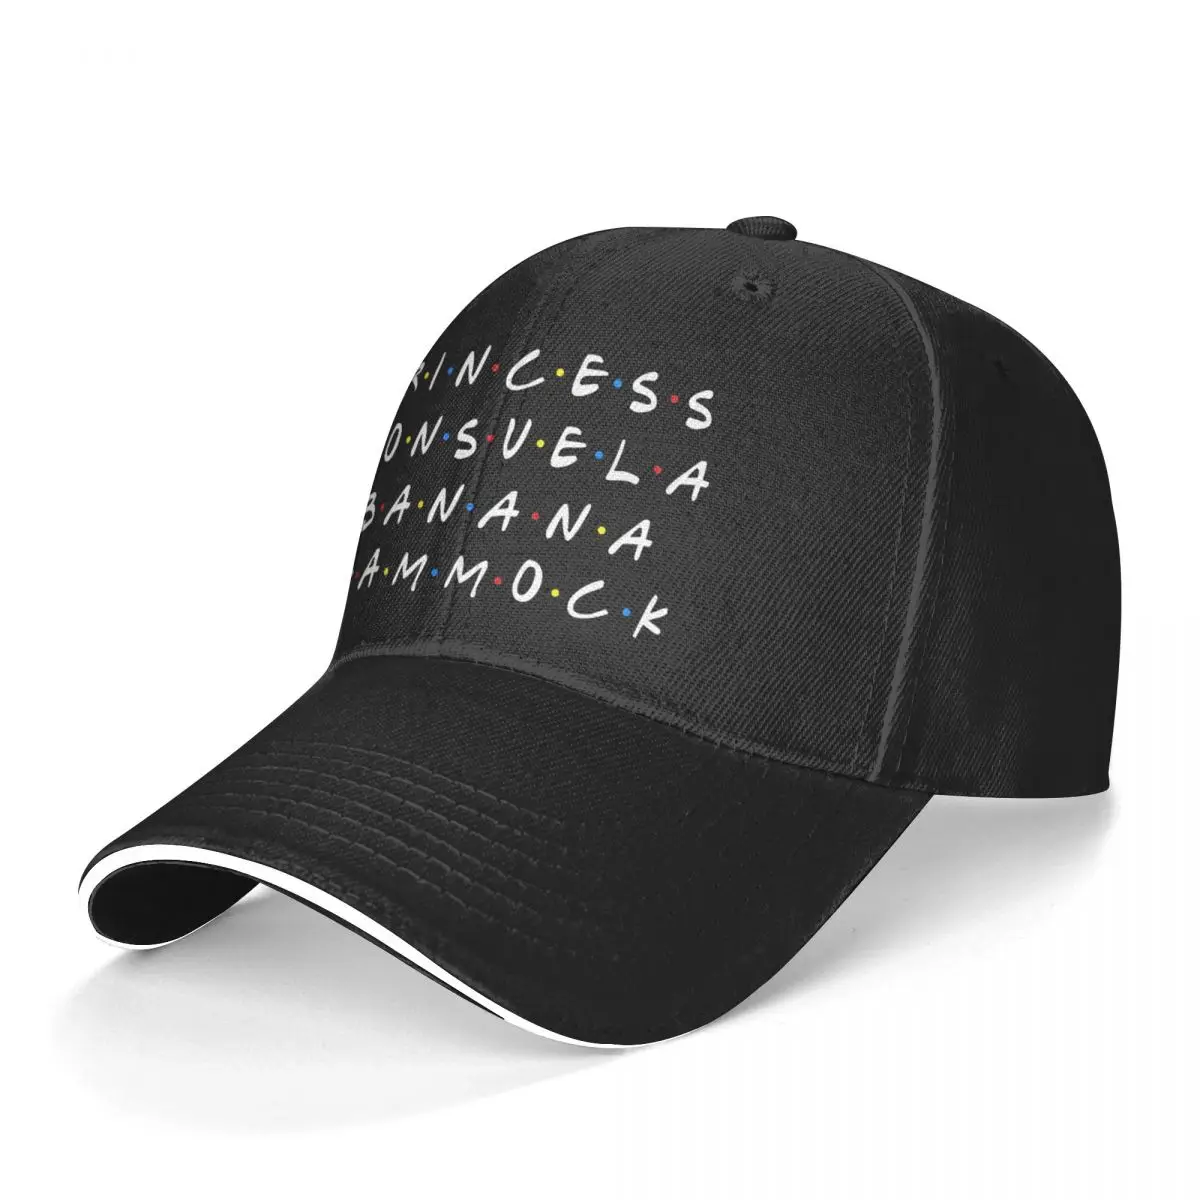 

Friends TV Show Baseball Cap PRINCESS CONSUELA BANANA HAMMOCK Retro Men Hip Hop Hats Custom Kpop Baseball Caps Gift